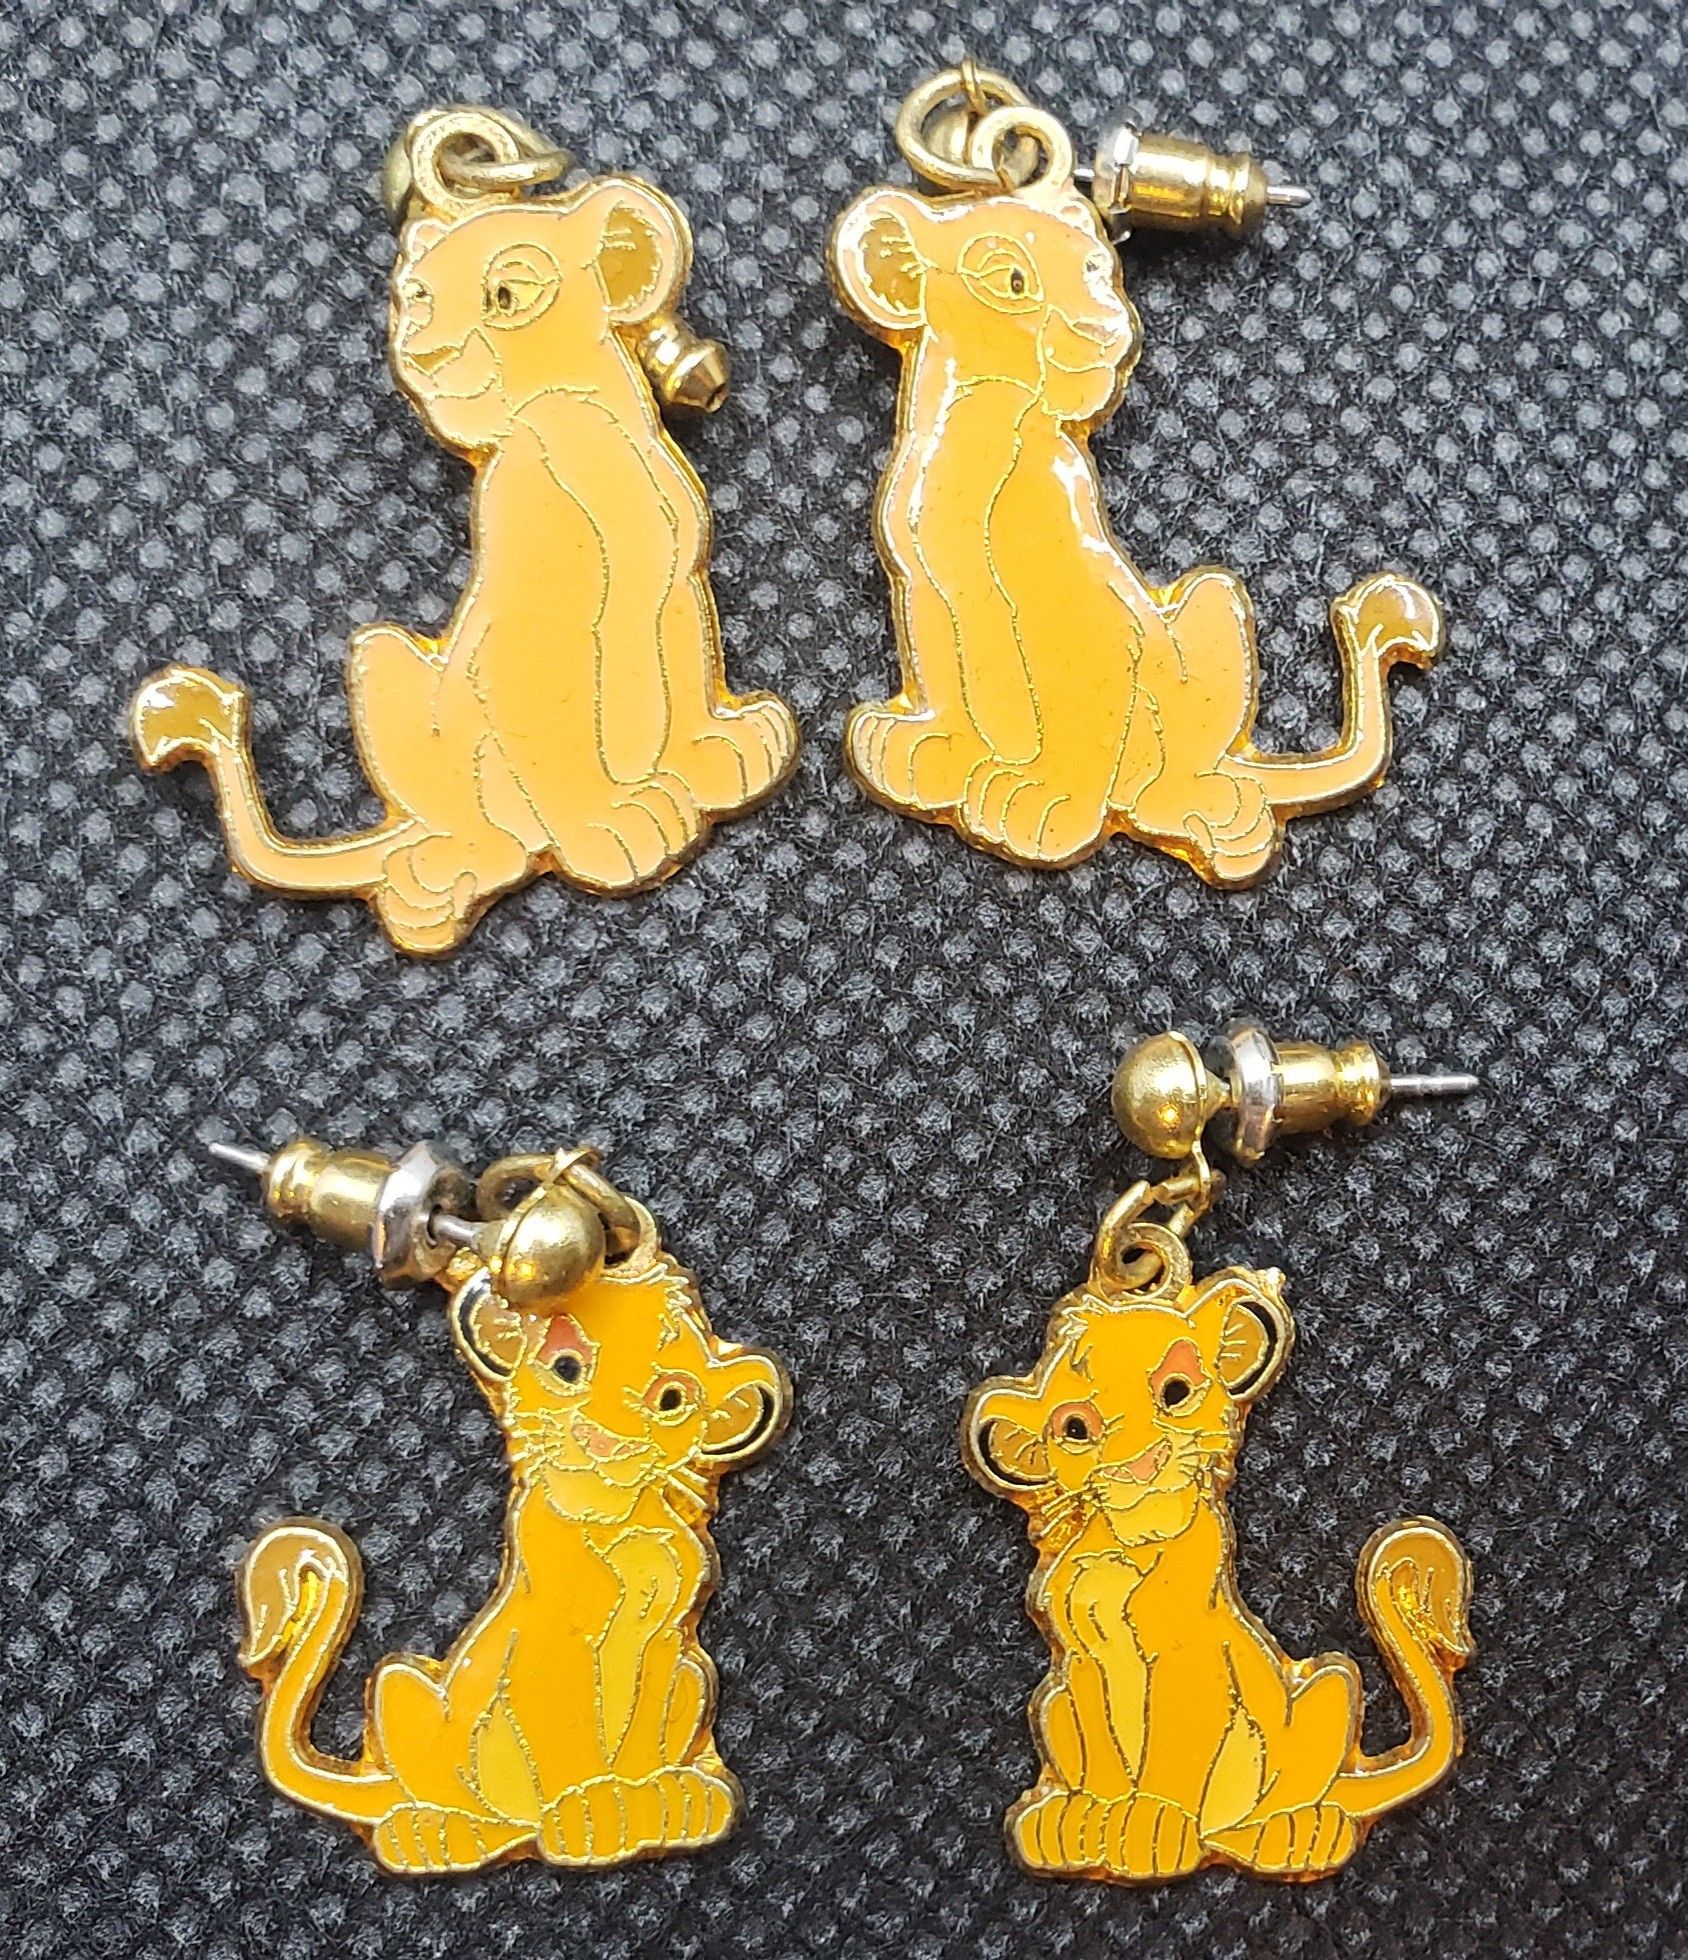 Vintage 90s Disney Lion King earrings Simba and Nala **$5 each pair**